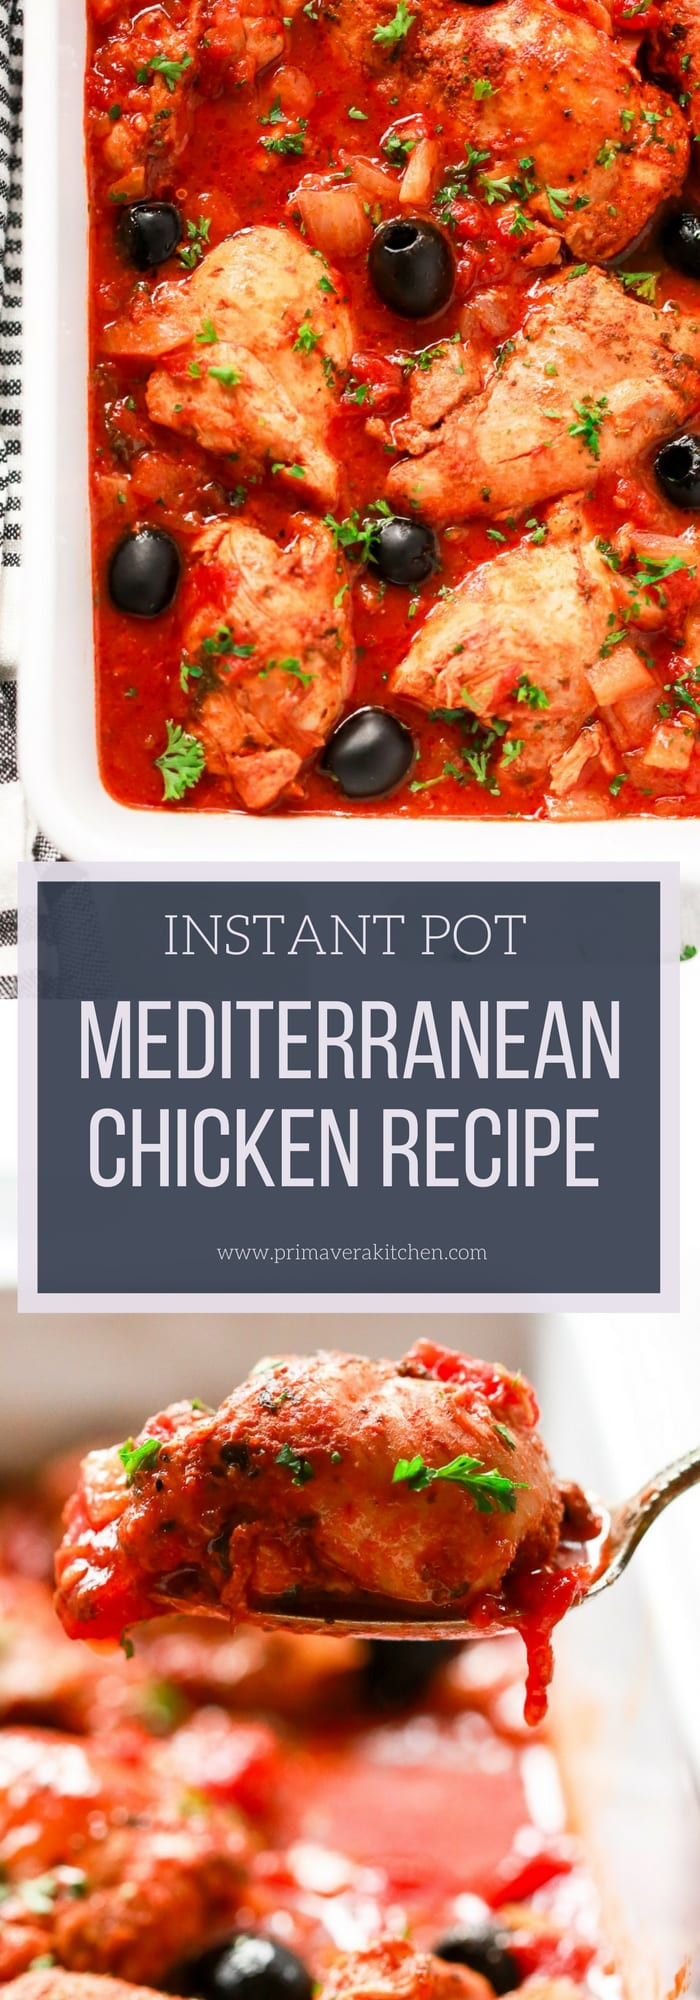 Low Calorie Instant Pot Recipes
 Instant Pot Mediterranean Chicken Recipe Primavera Kitchen